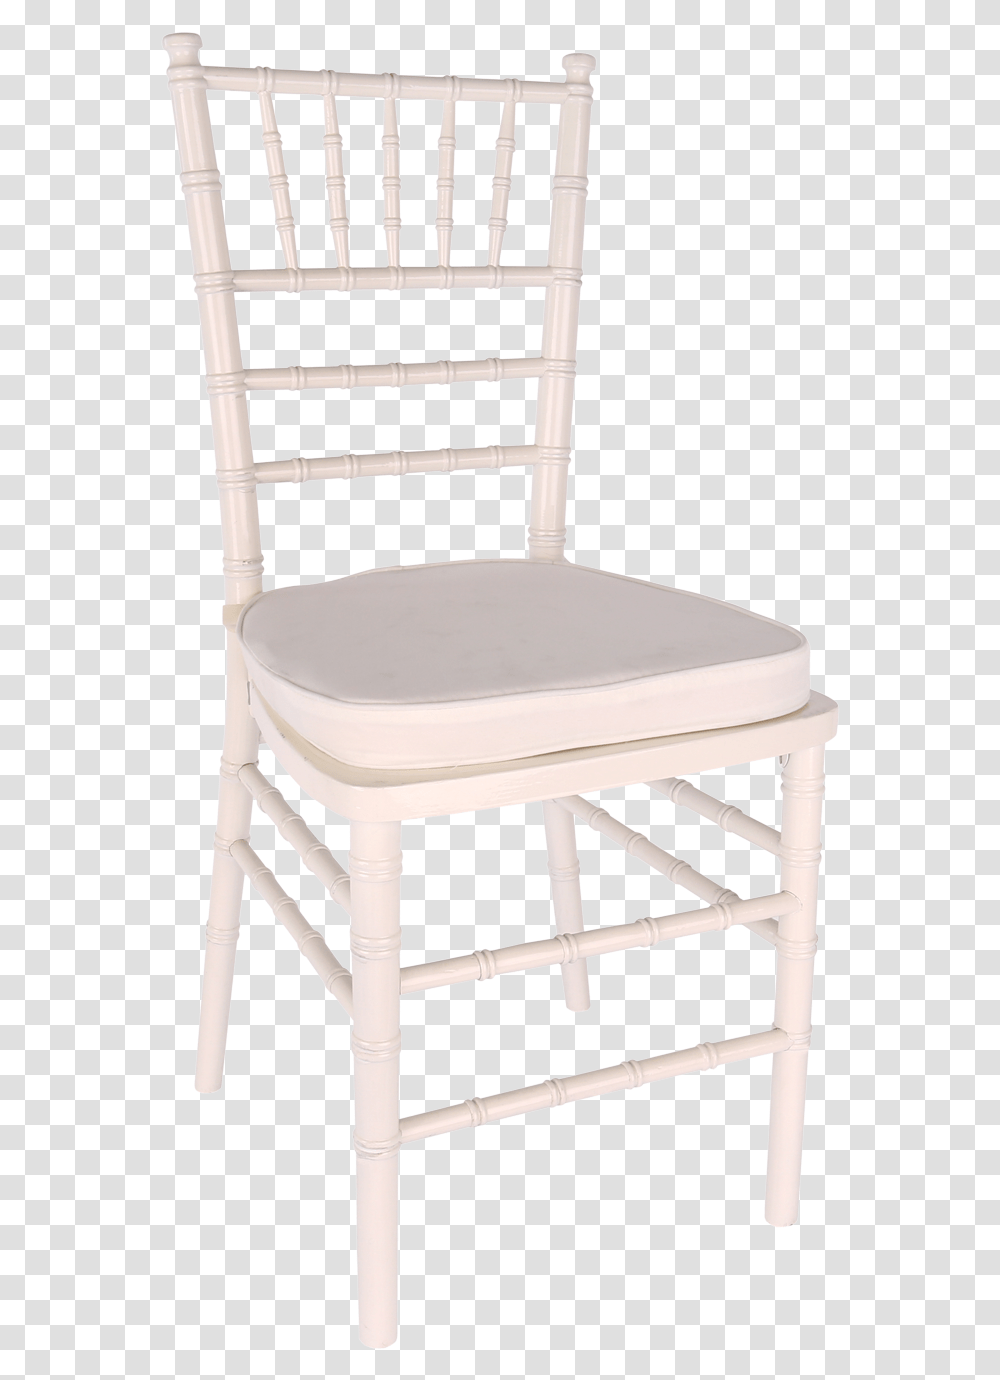 Chair White Chiavari With Cushion White Chiavari Chair With White Cushion, Furniture, Rocking Chair Transparent Png